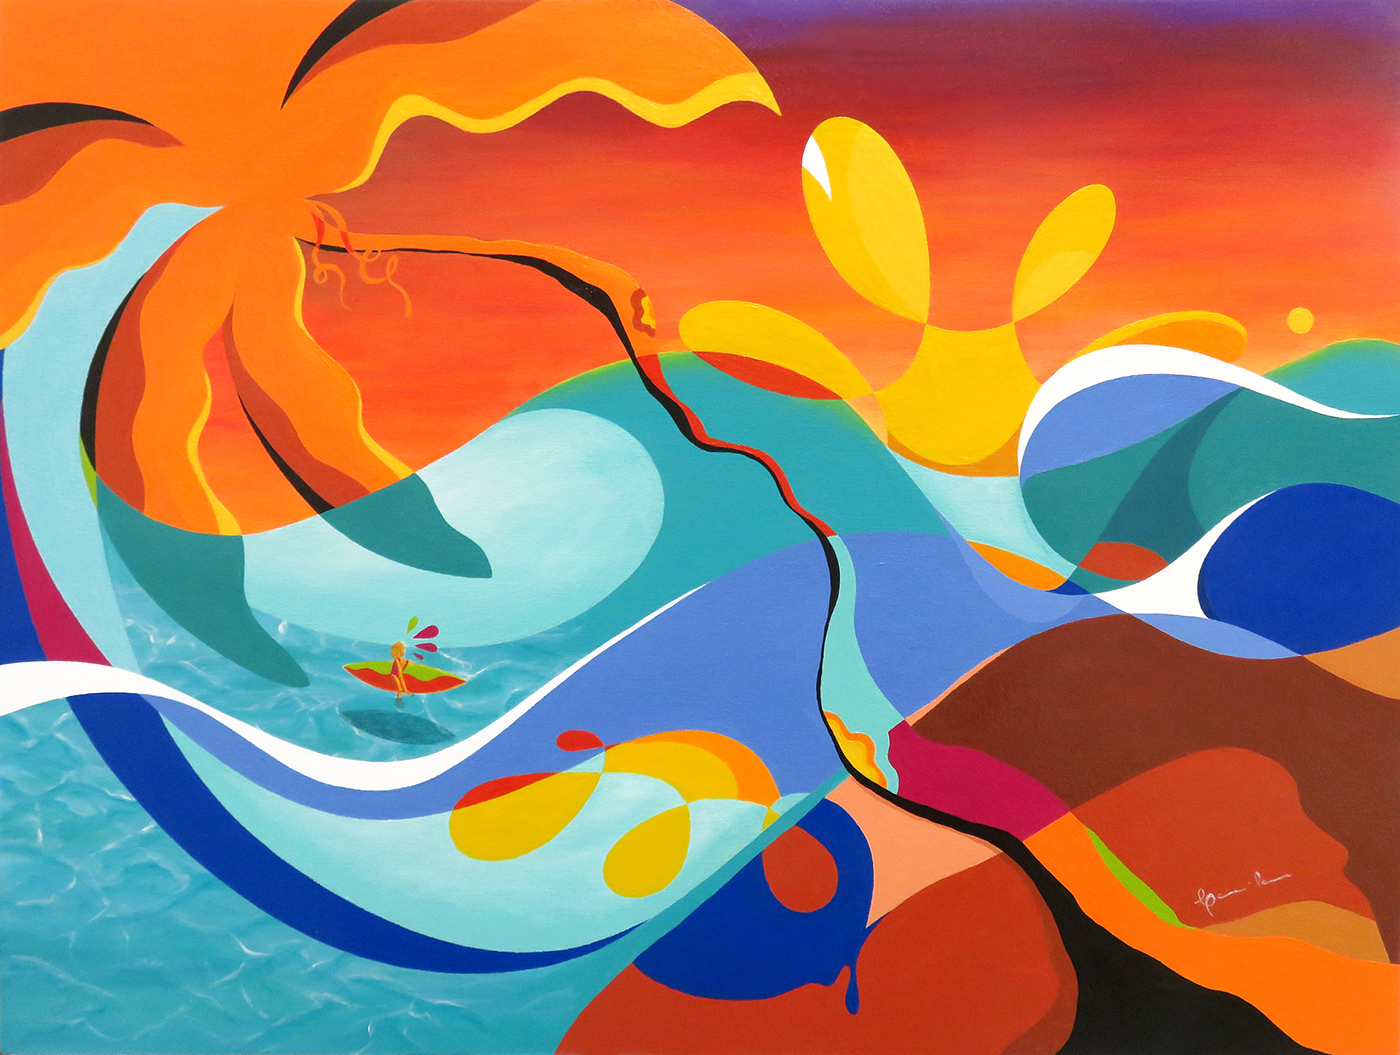 acrylic painting colors Digital Art  ILLUSTRATION  beach Surf havaianas kidlit new yorker Washington Post